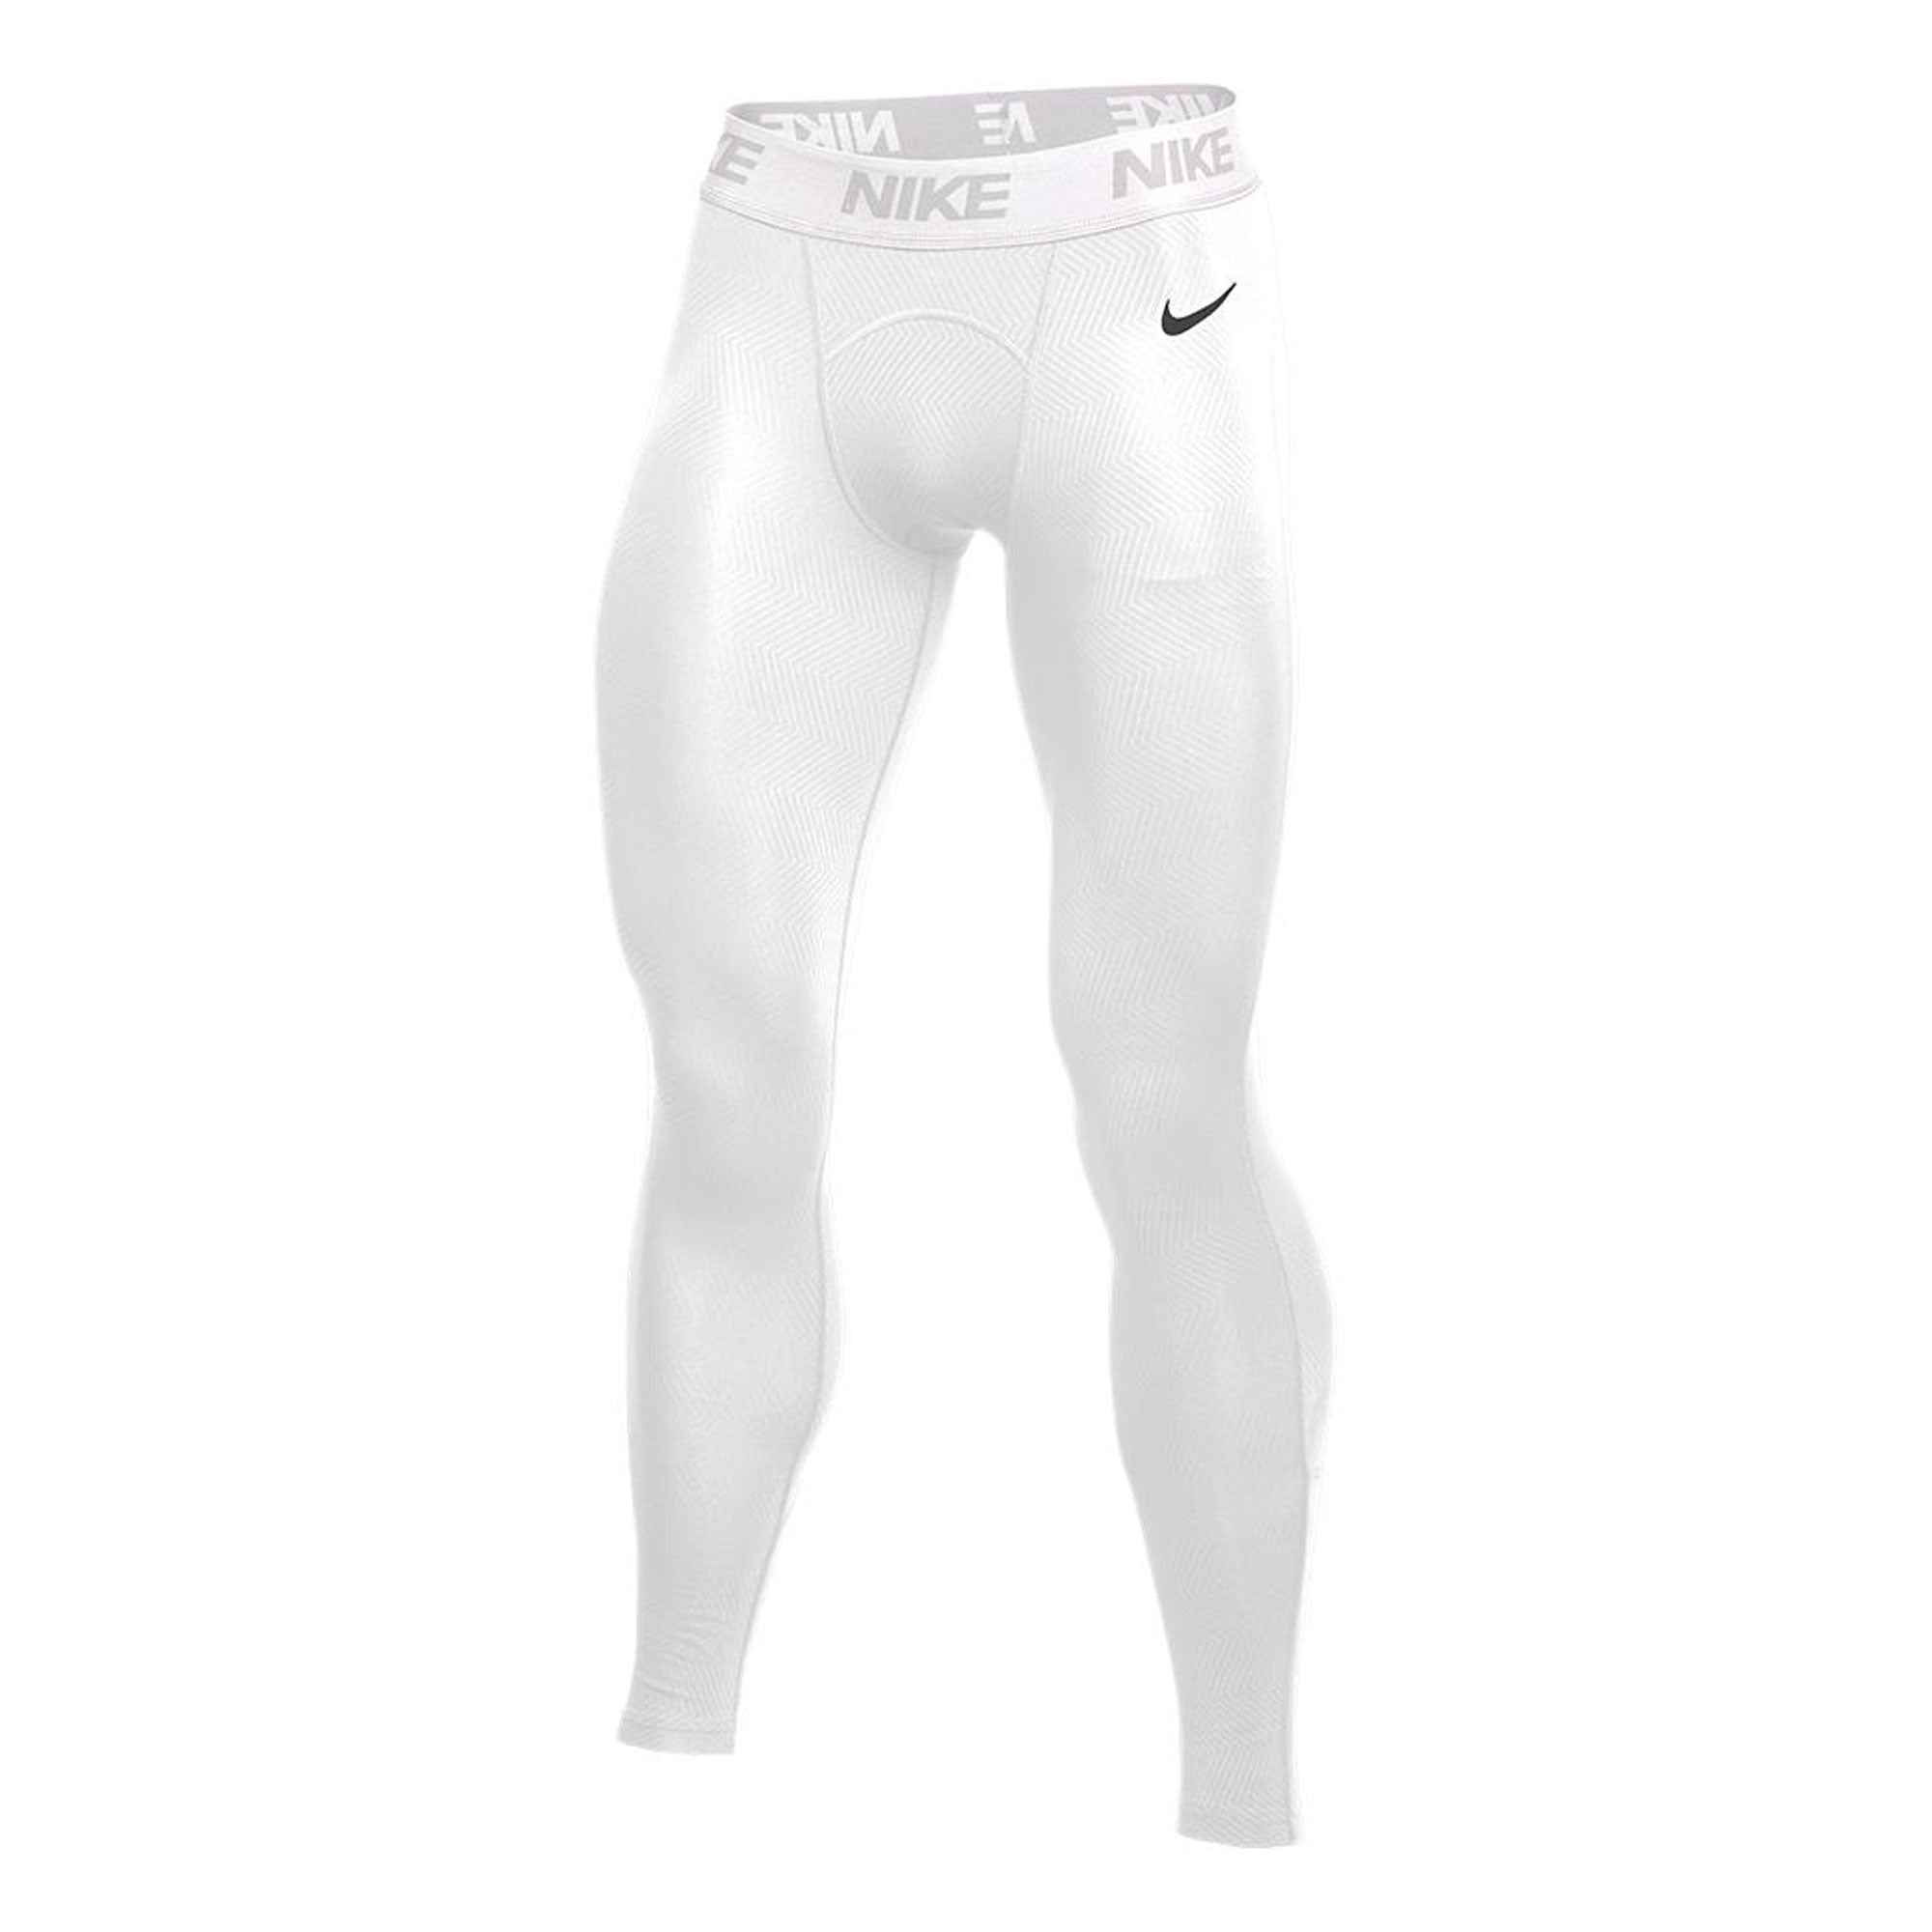 Nike Men's Pro Therma Training Tights - White/Black